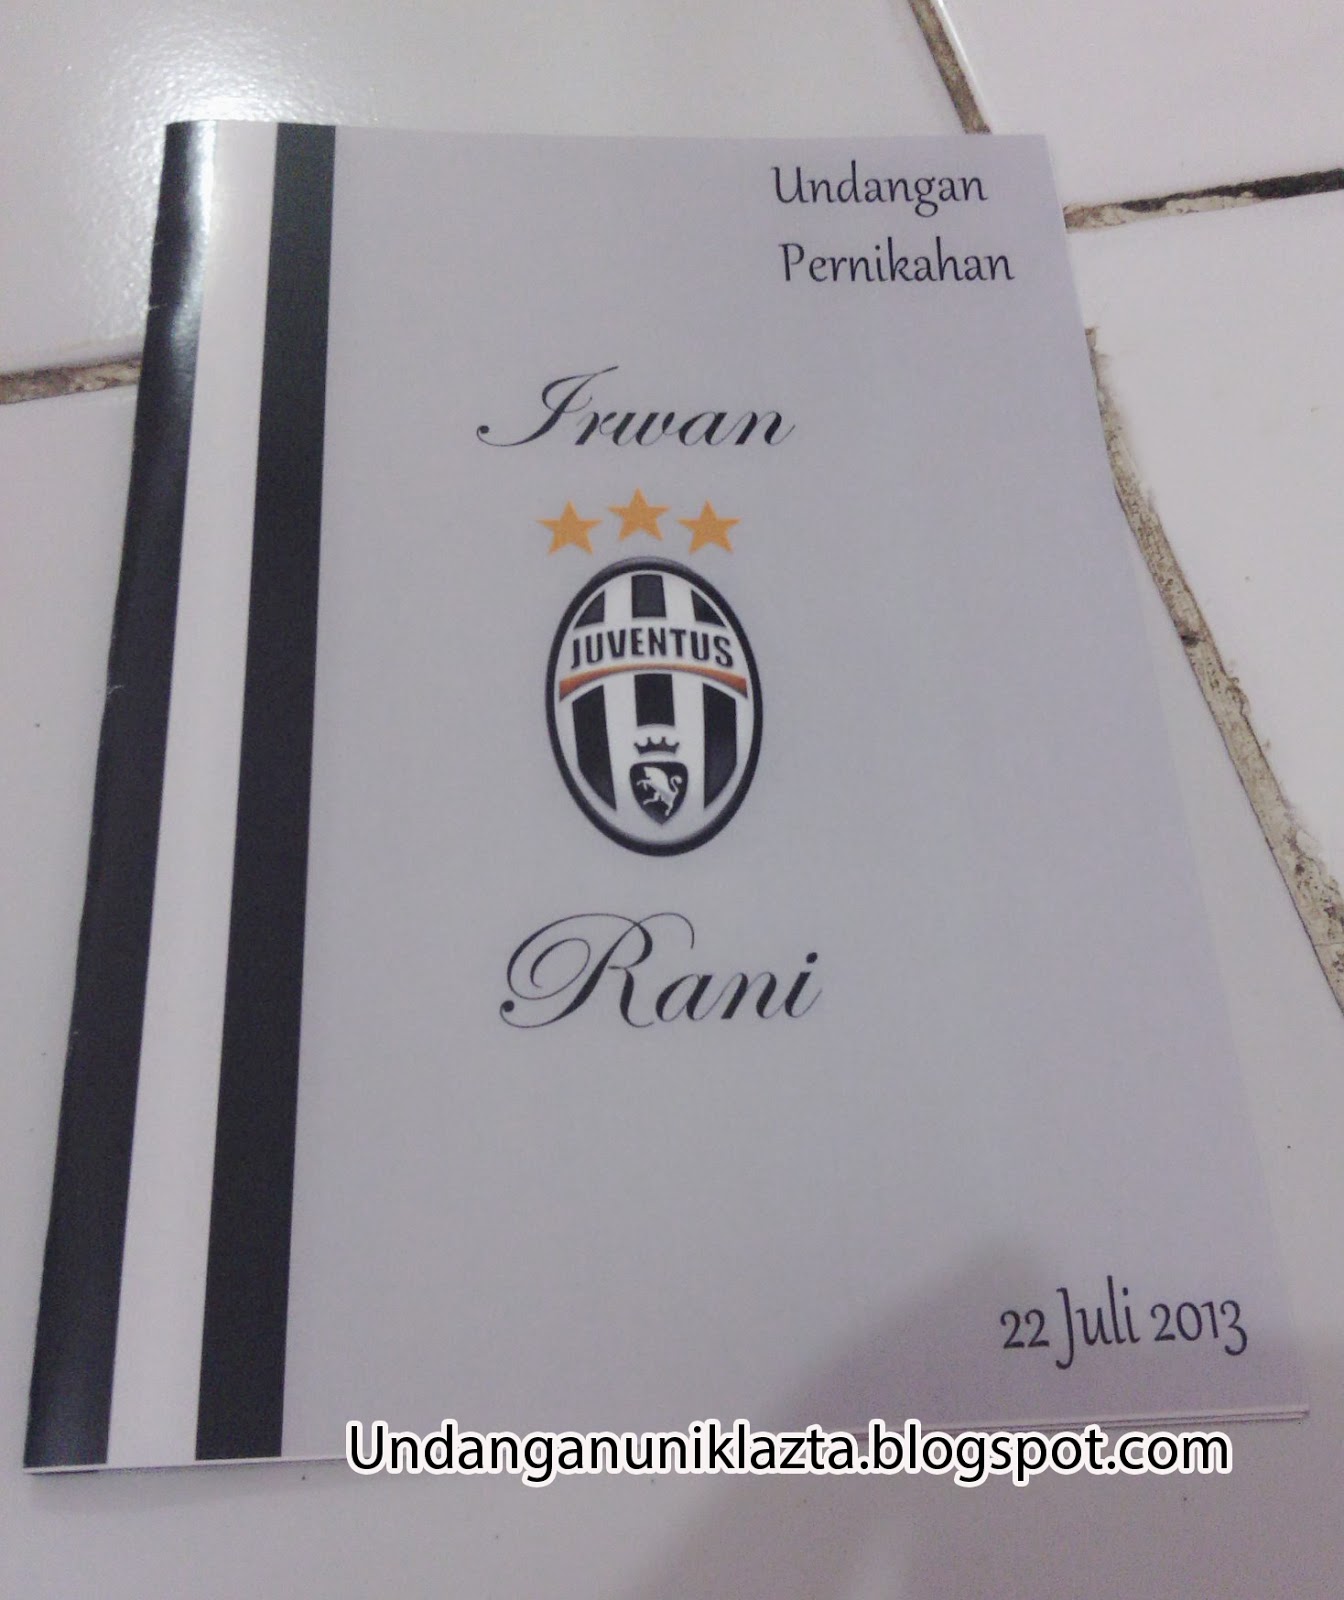 Contoh Undangan Pernikahan Juventus